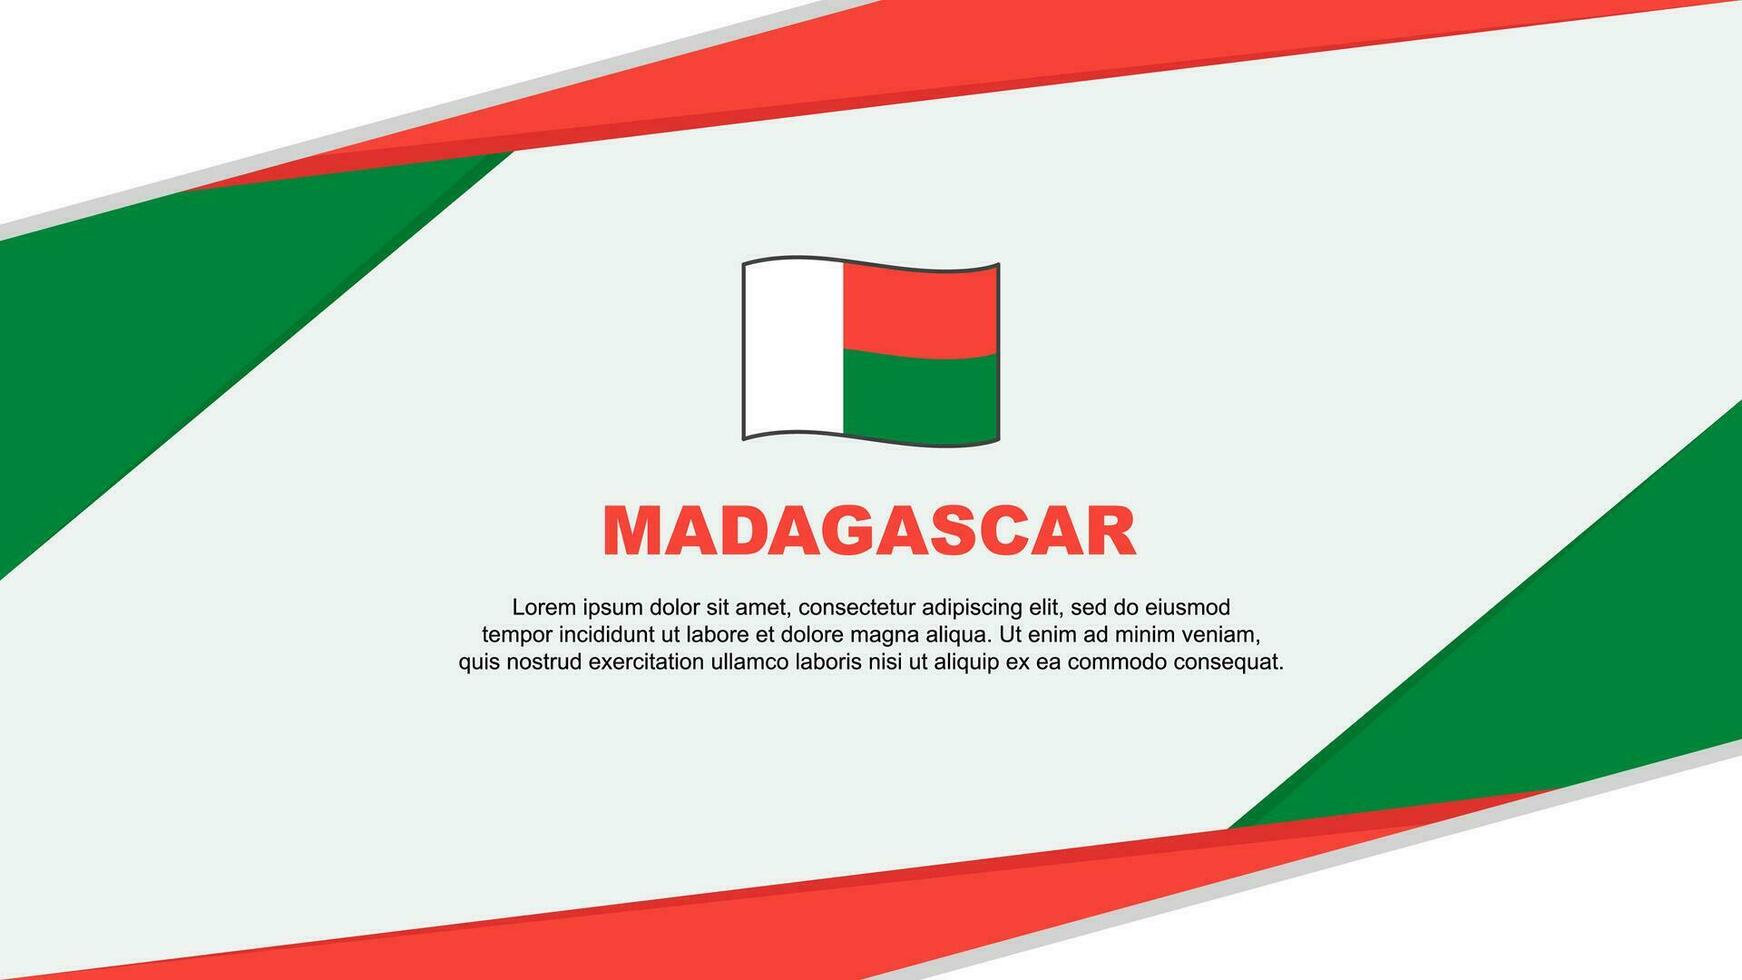 Madagascar Flag Abstract Background Design Template. Madagascar Independence Day Banner Cartoon Vector Illustration. Madagascar